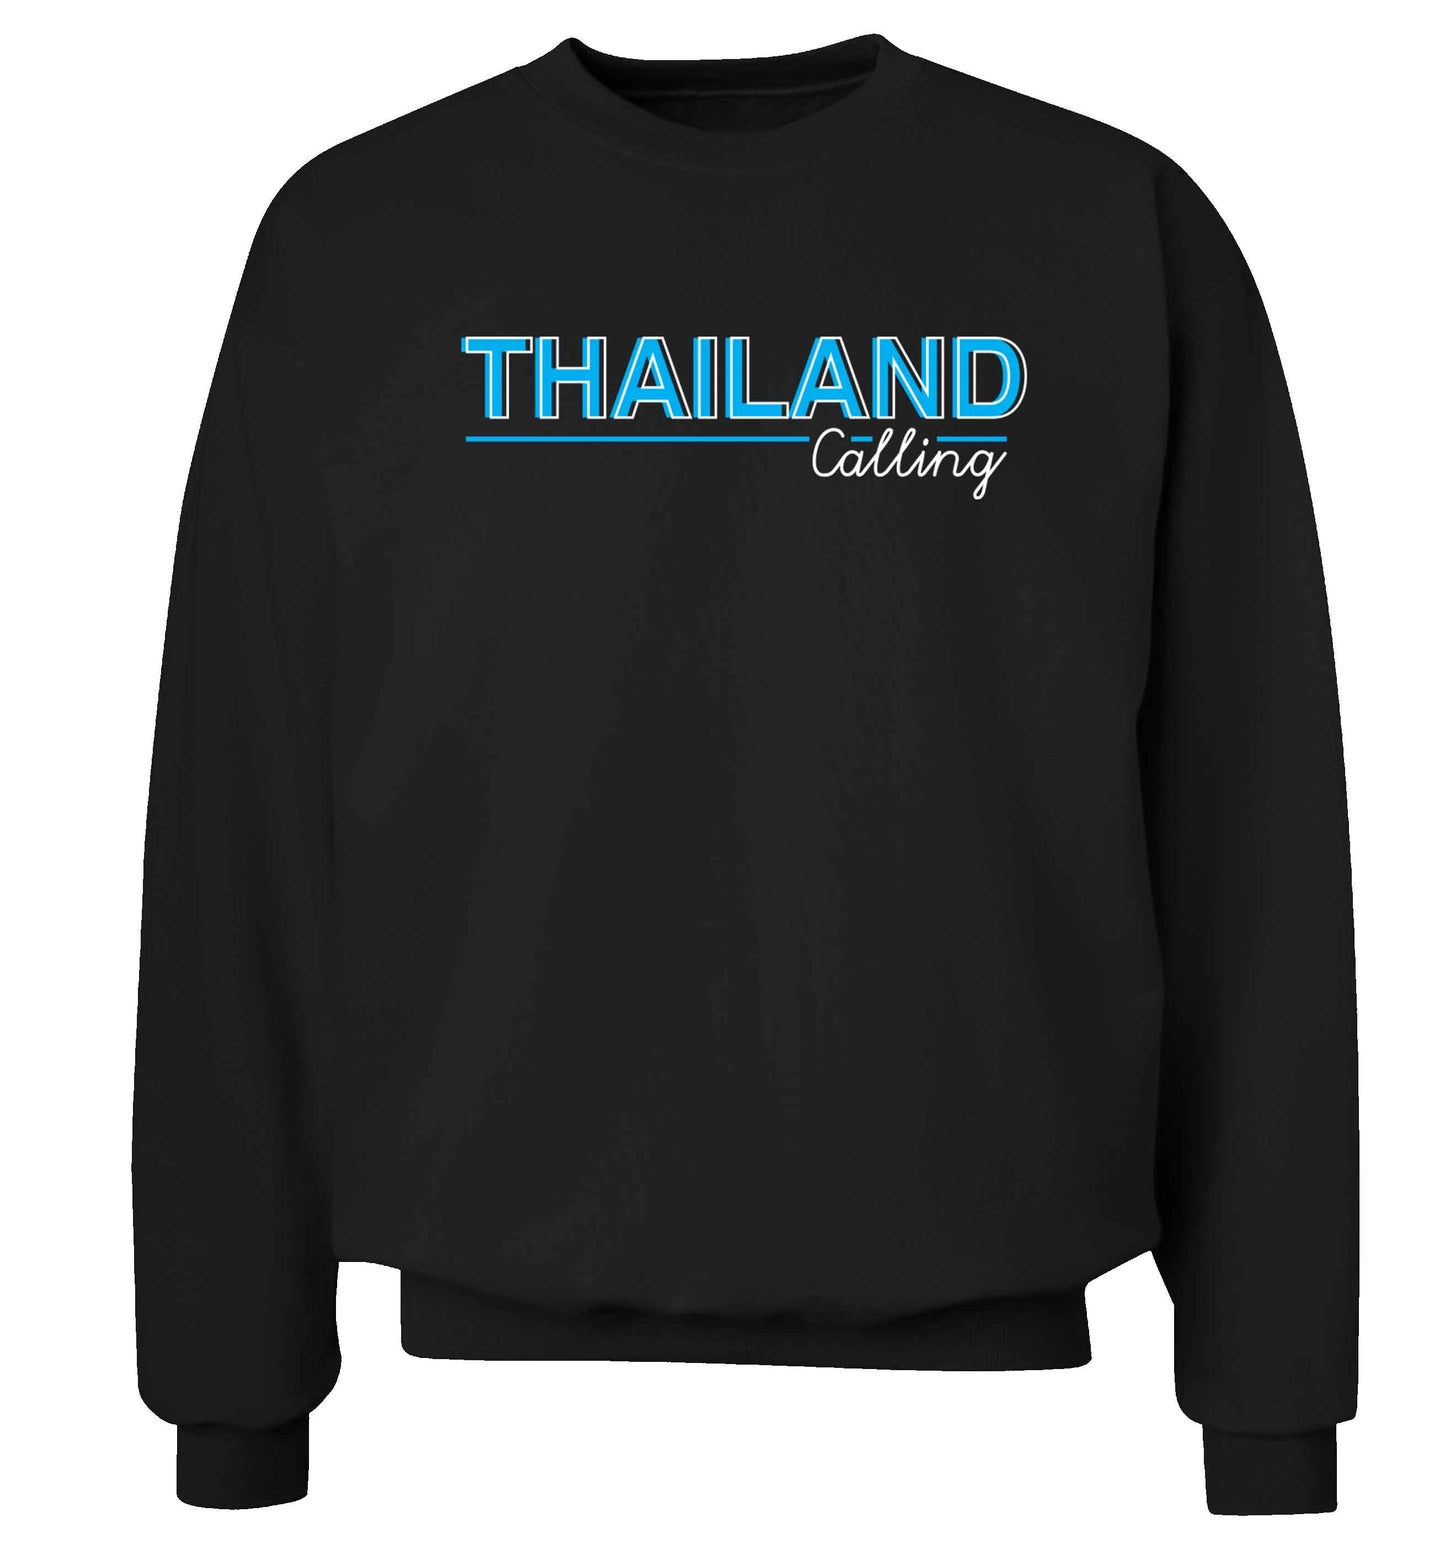 Thailand calling Adult's unisex black Sweater 2XL